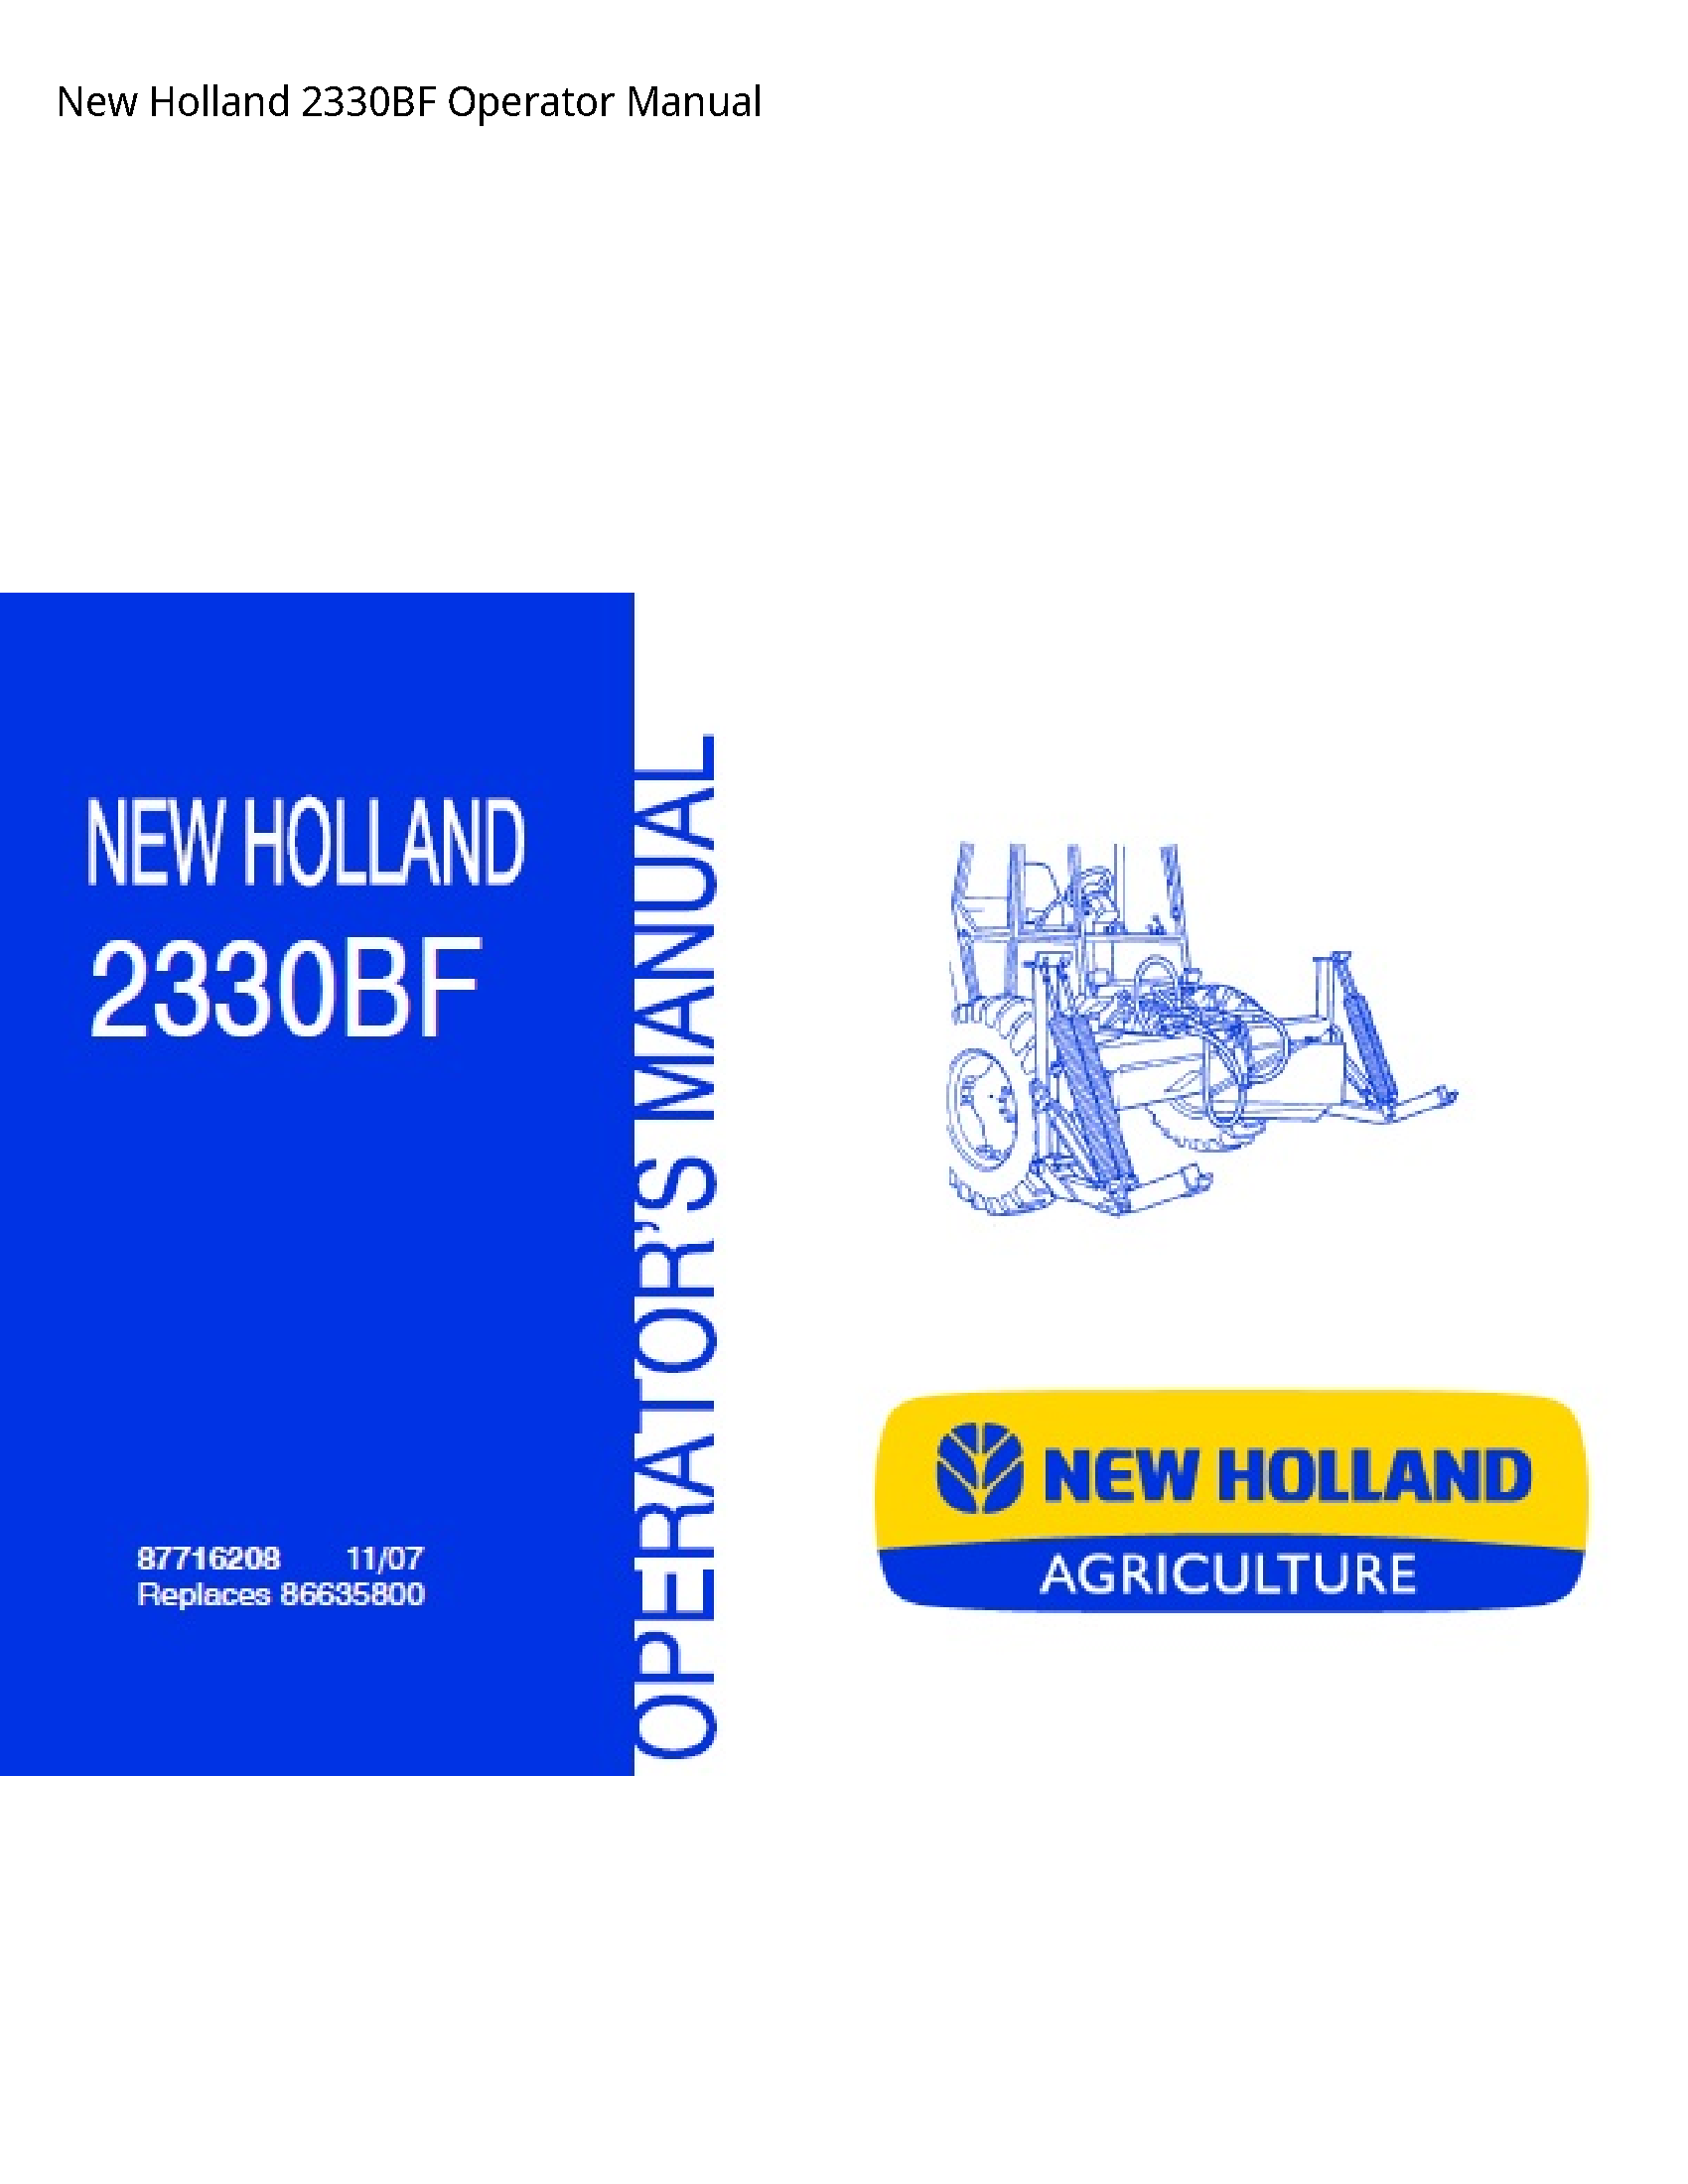 New Holland 2330BF Operator manual